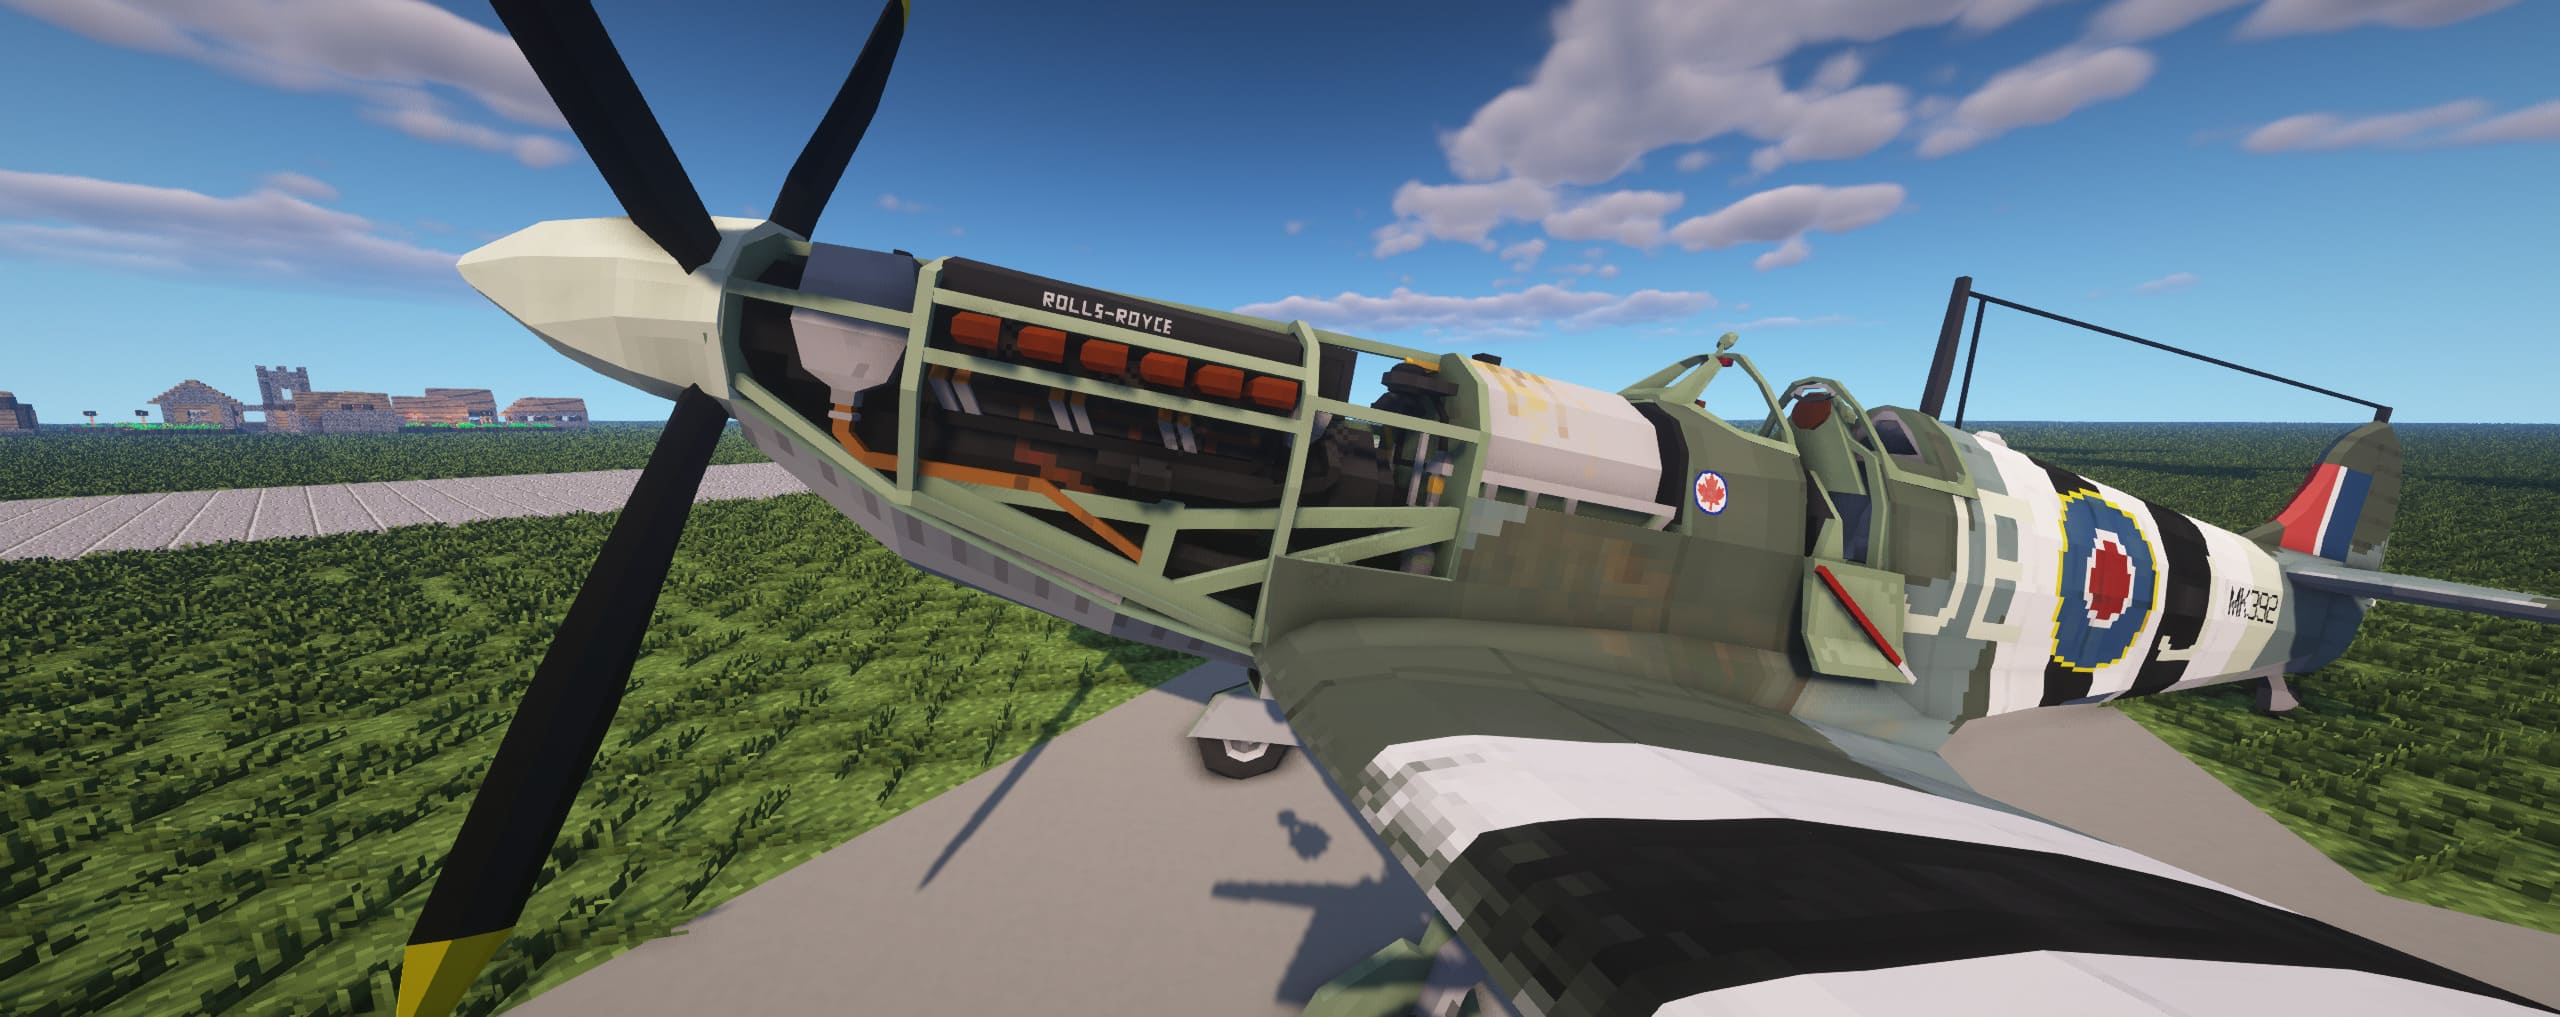 Immersive aircraft 1.19 2. Spitfire_Pack_1.12.2-1.3.0. Spitfire Pack. Мод на самолеты. Spitfire Pack 1.12.2.